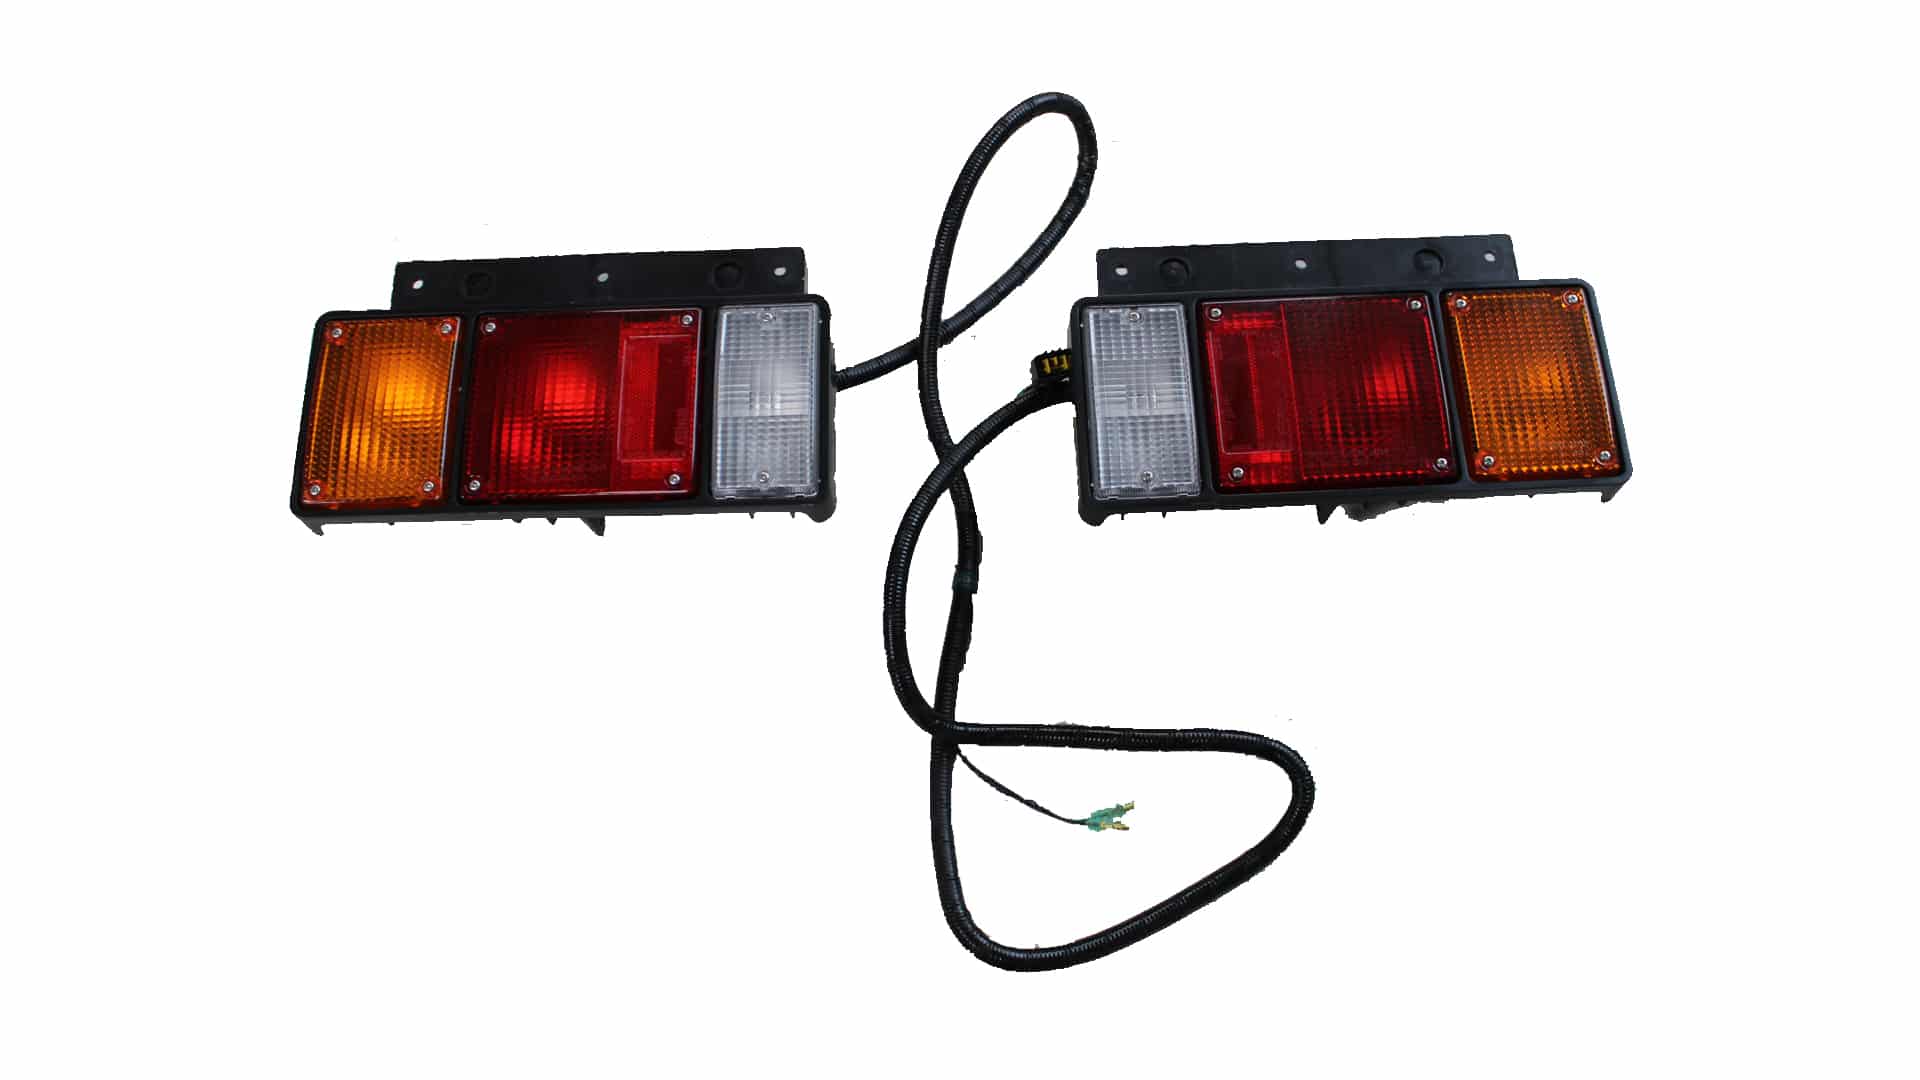 Modregning Markeret indhente Isuzu NPR Tail Light Assembly-Like New $75.00 - Super Lawn Trucks